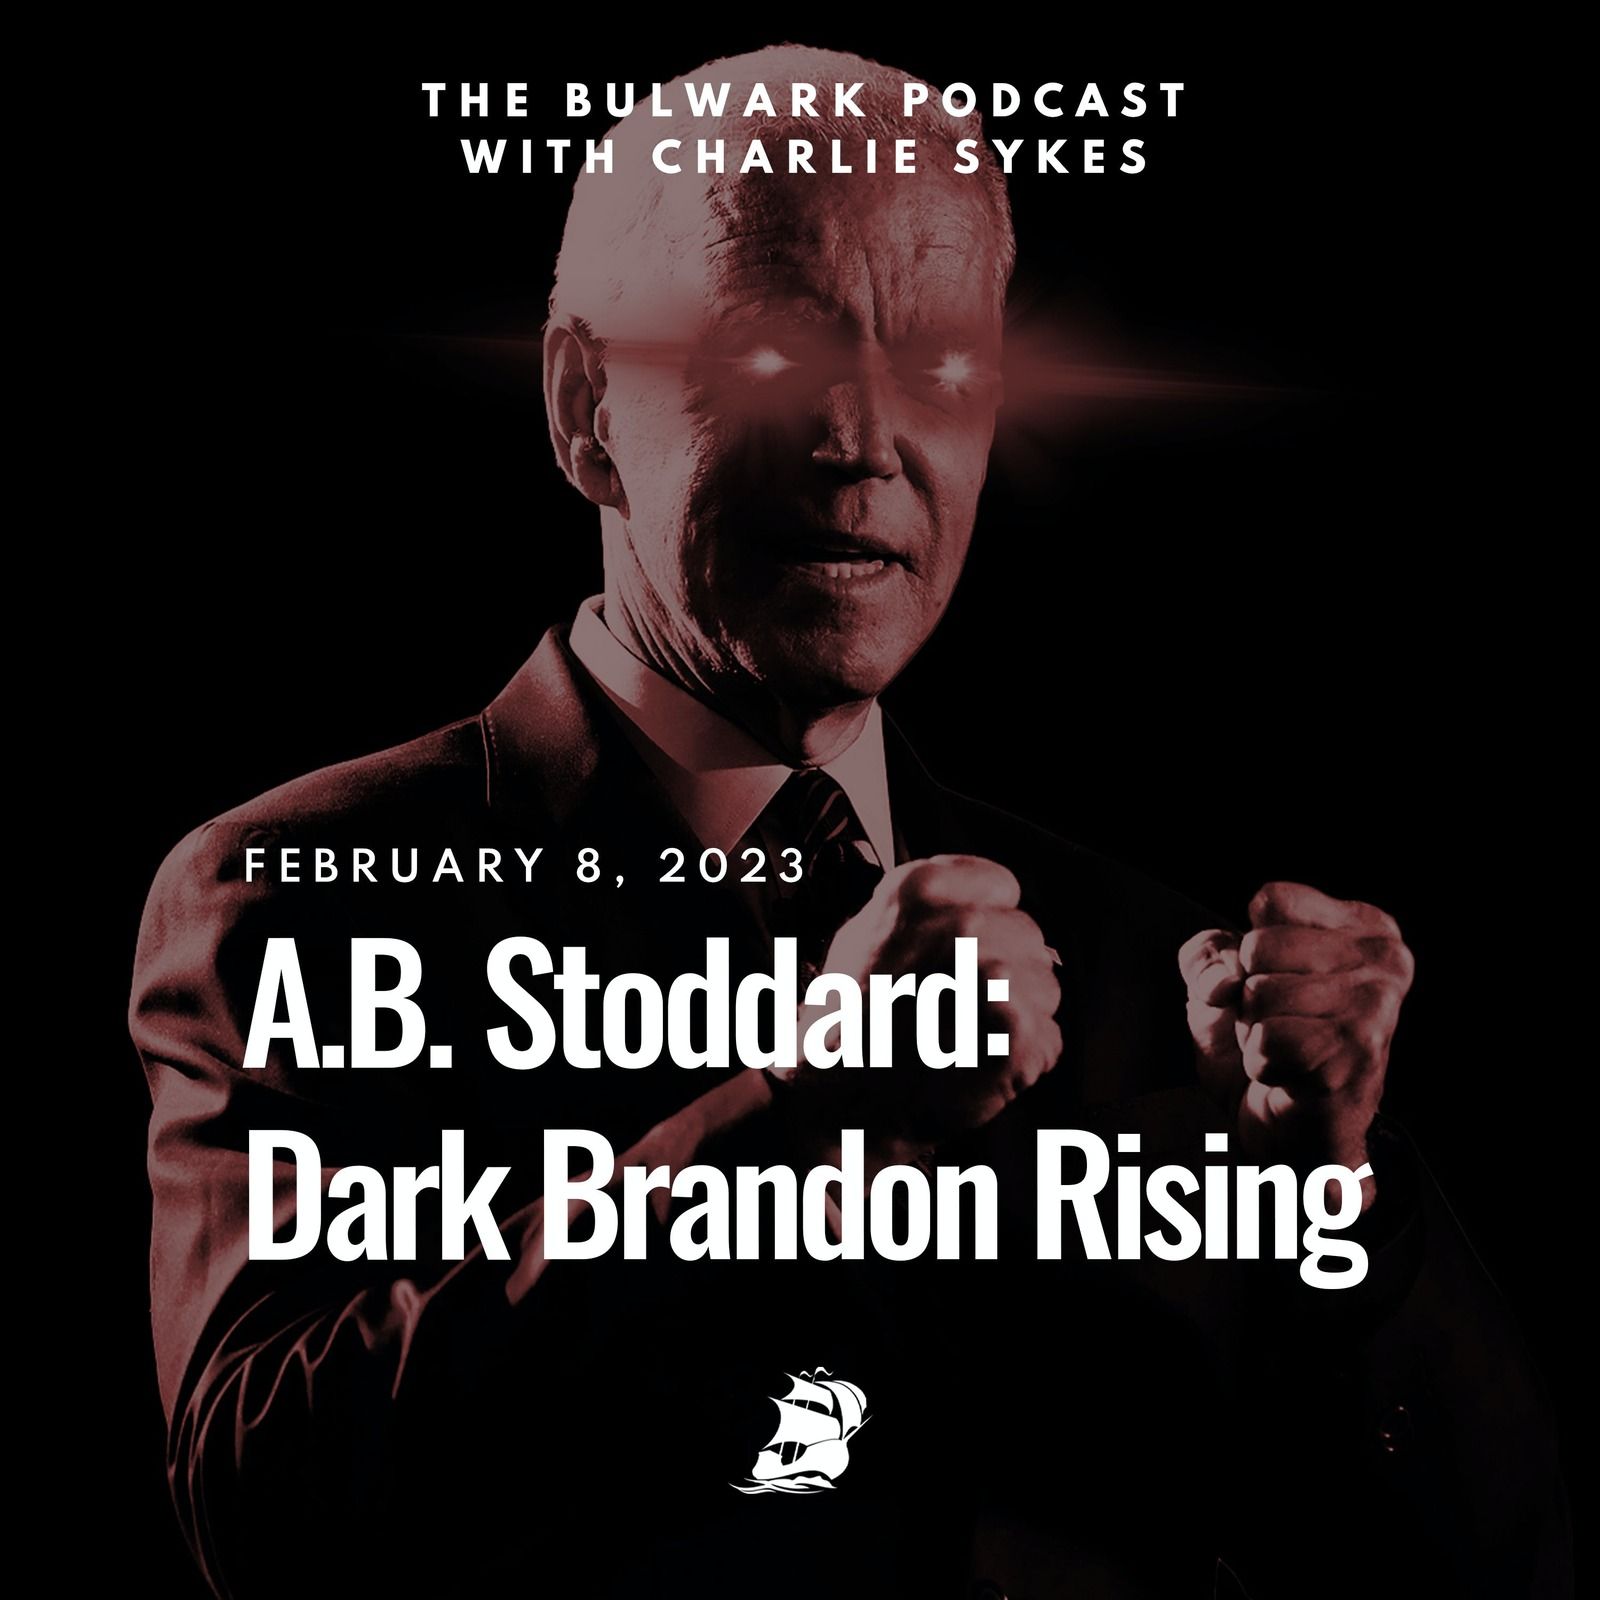 A.B. Stoddard: Dark Brandon Rising